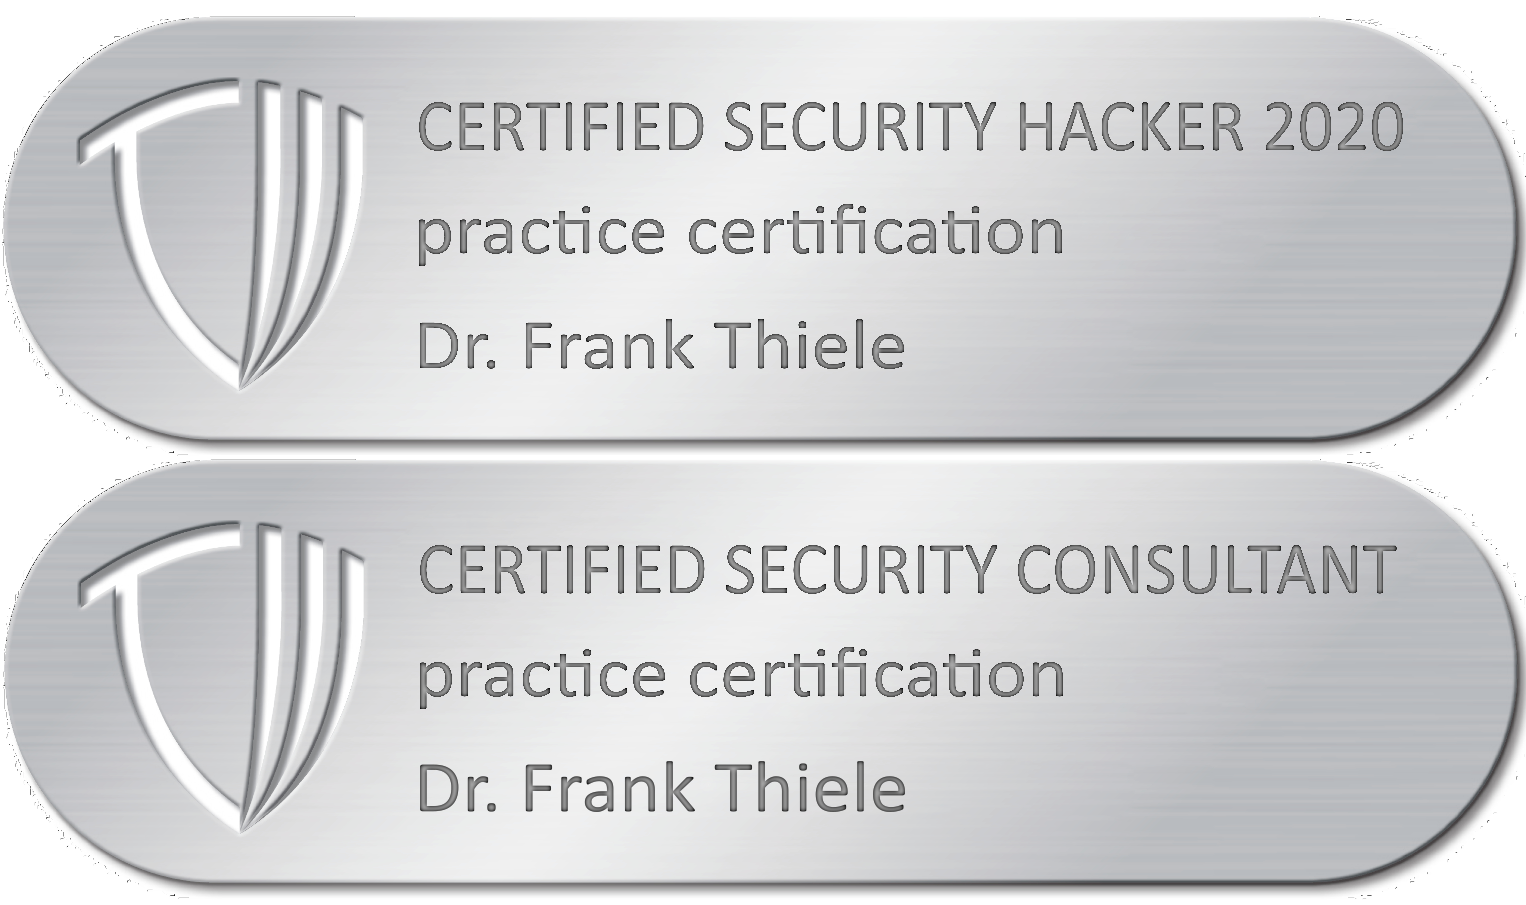 Certified Security Hacker und Consultant